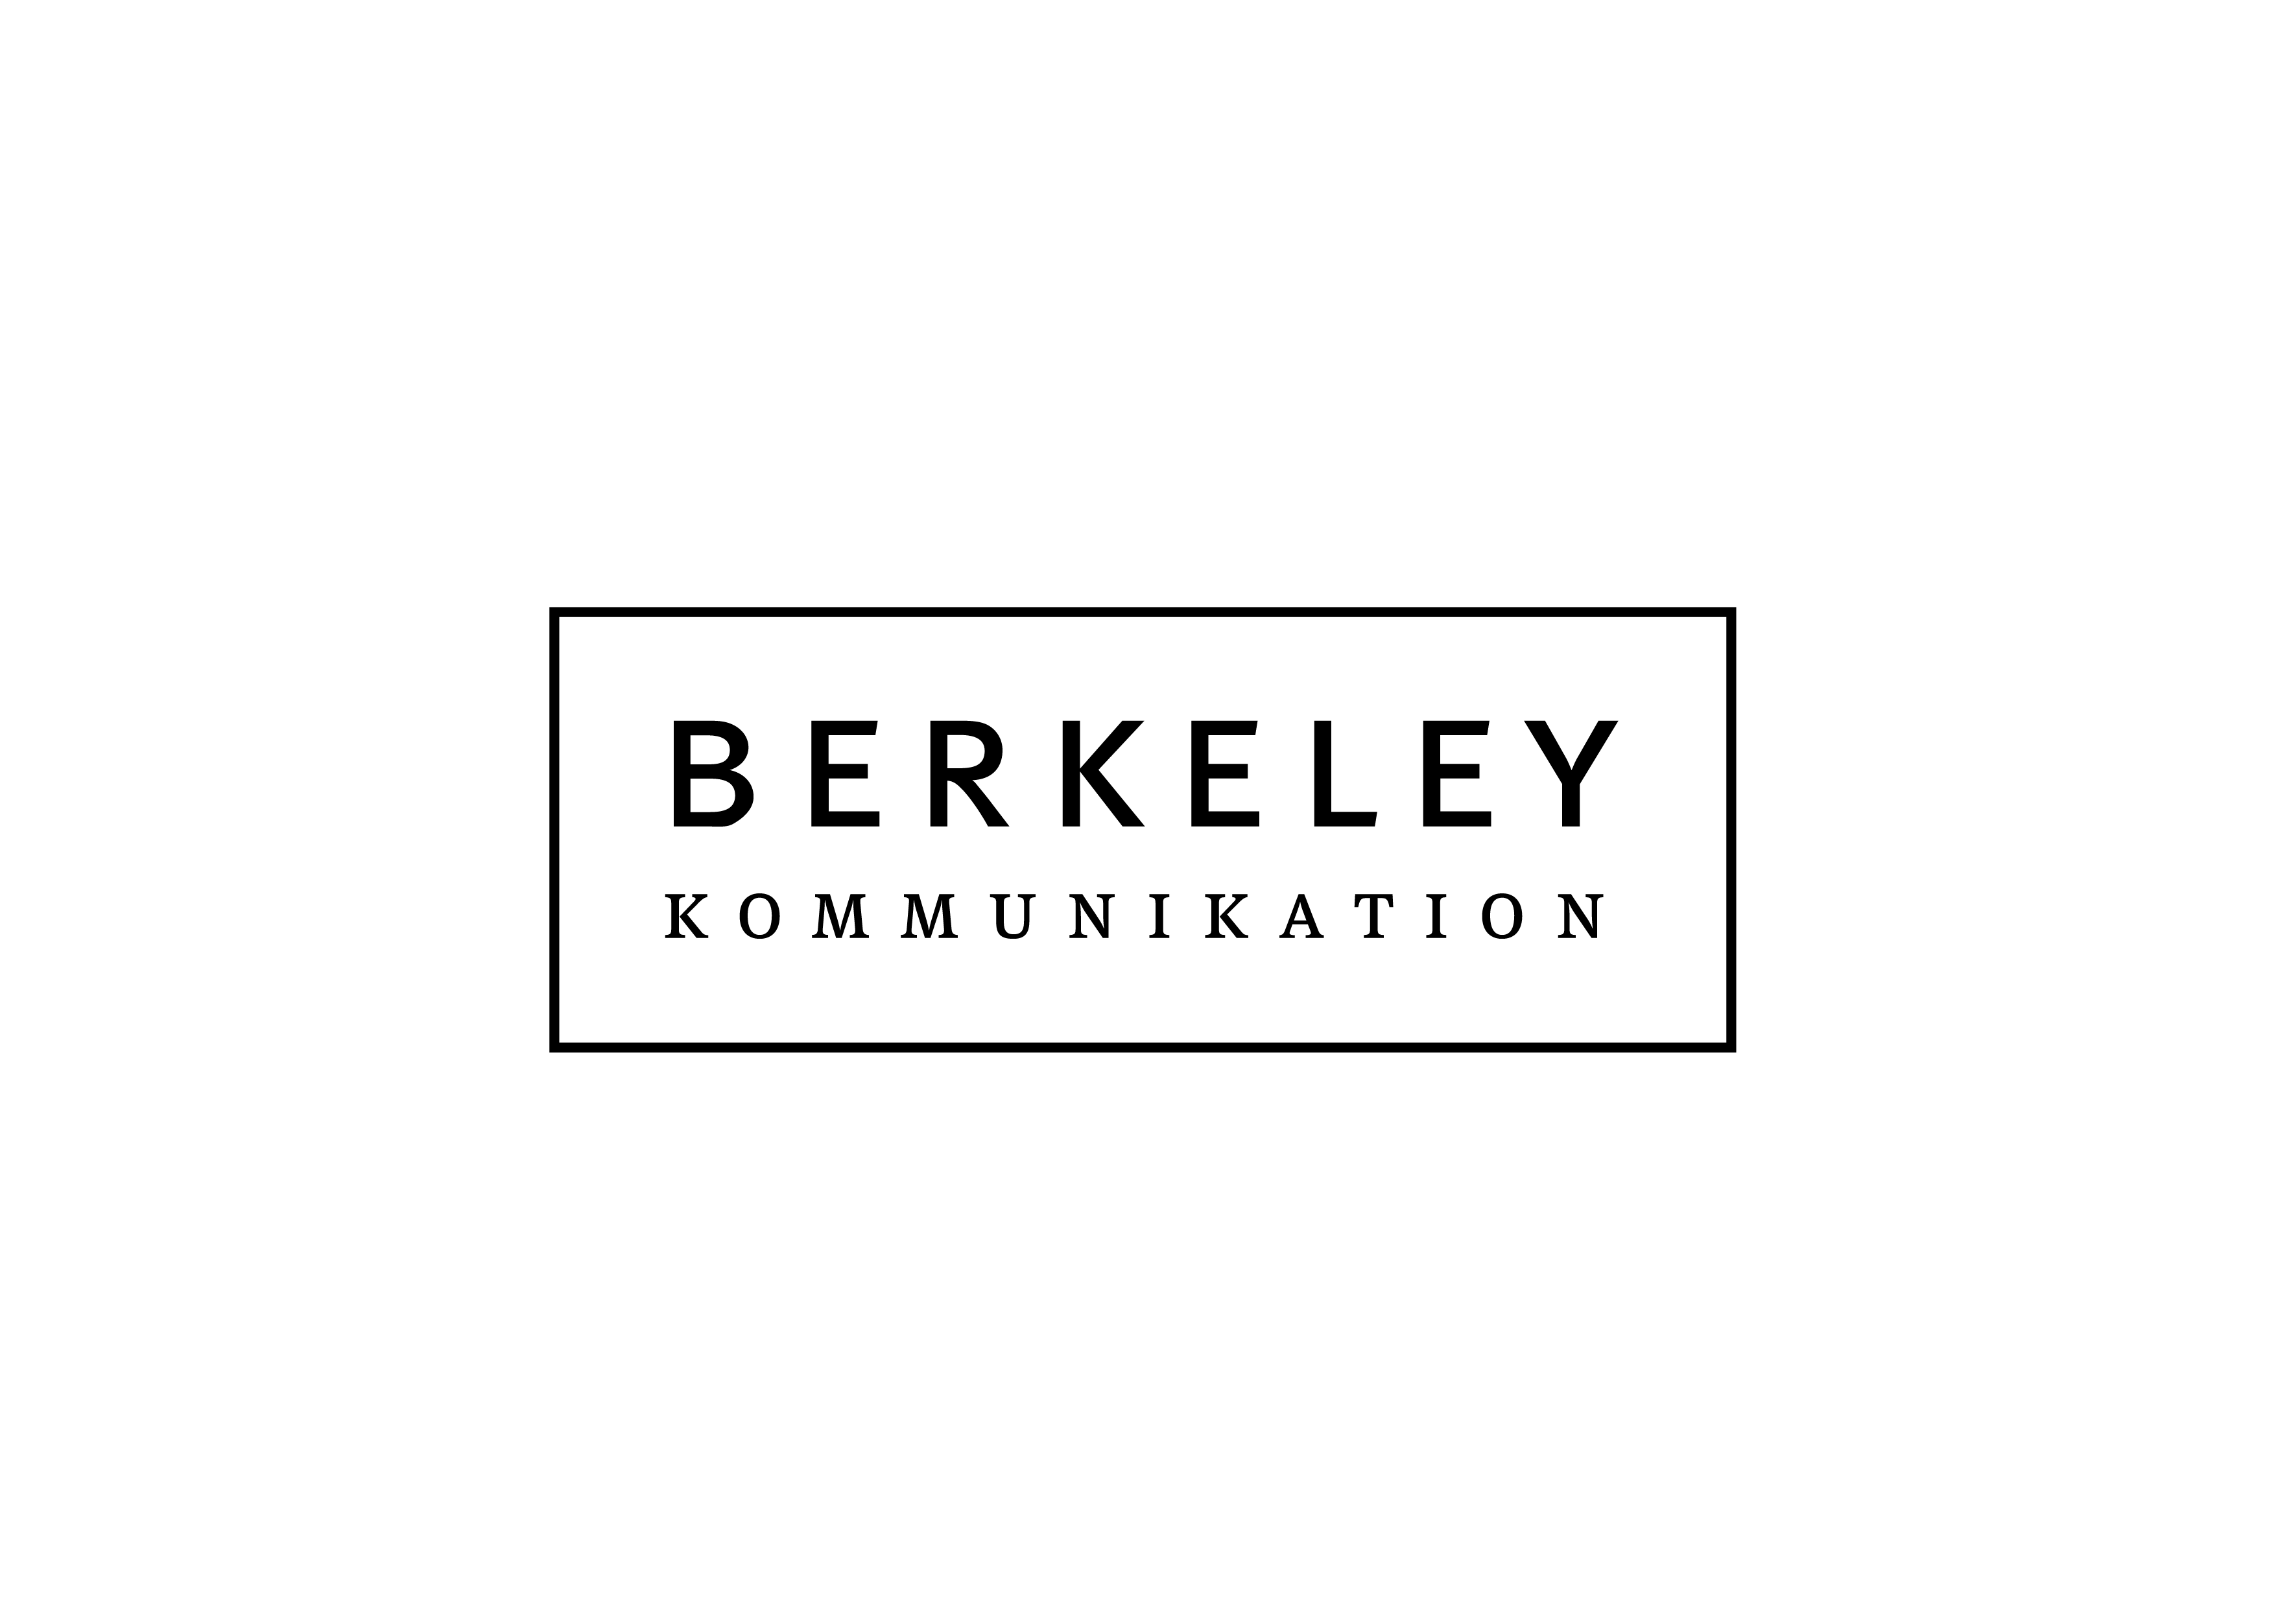 Berkeley Kommunikation profile on Qualified.One